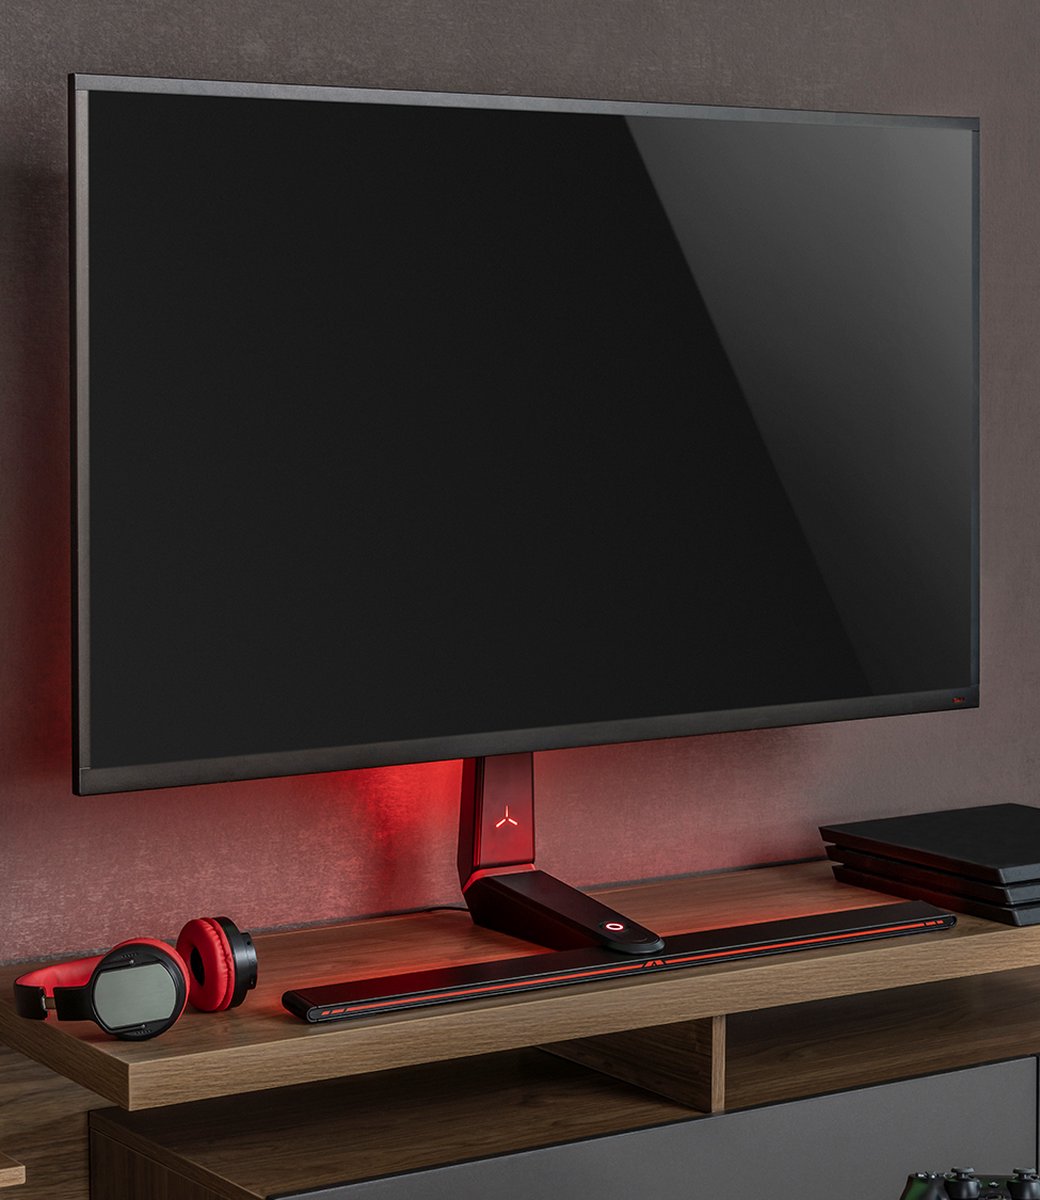 Tv Stand Gaming | RGB Lighting | Black TV Base for playstation or xbox setup